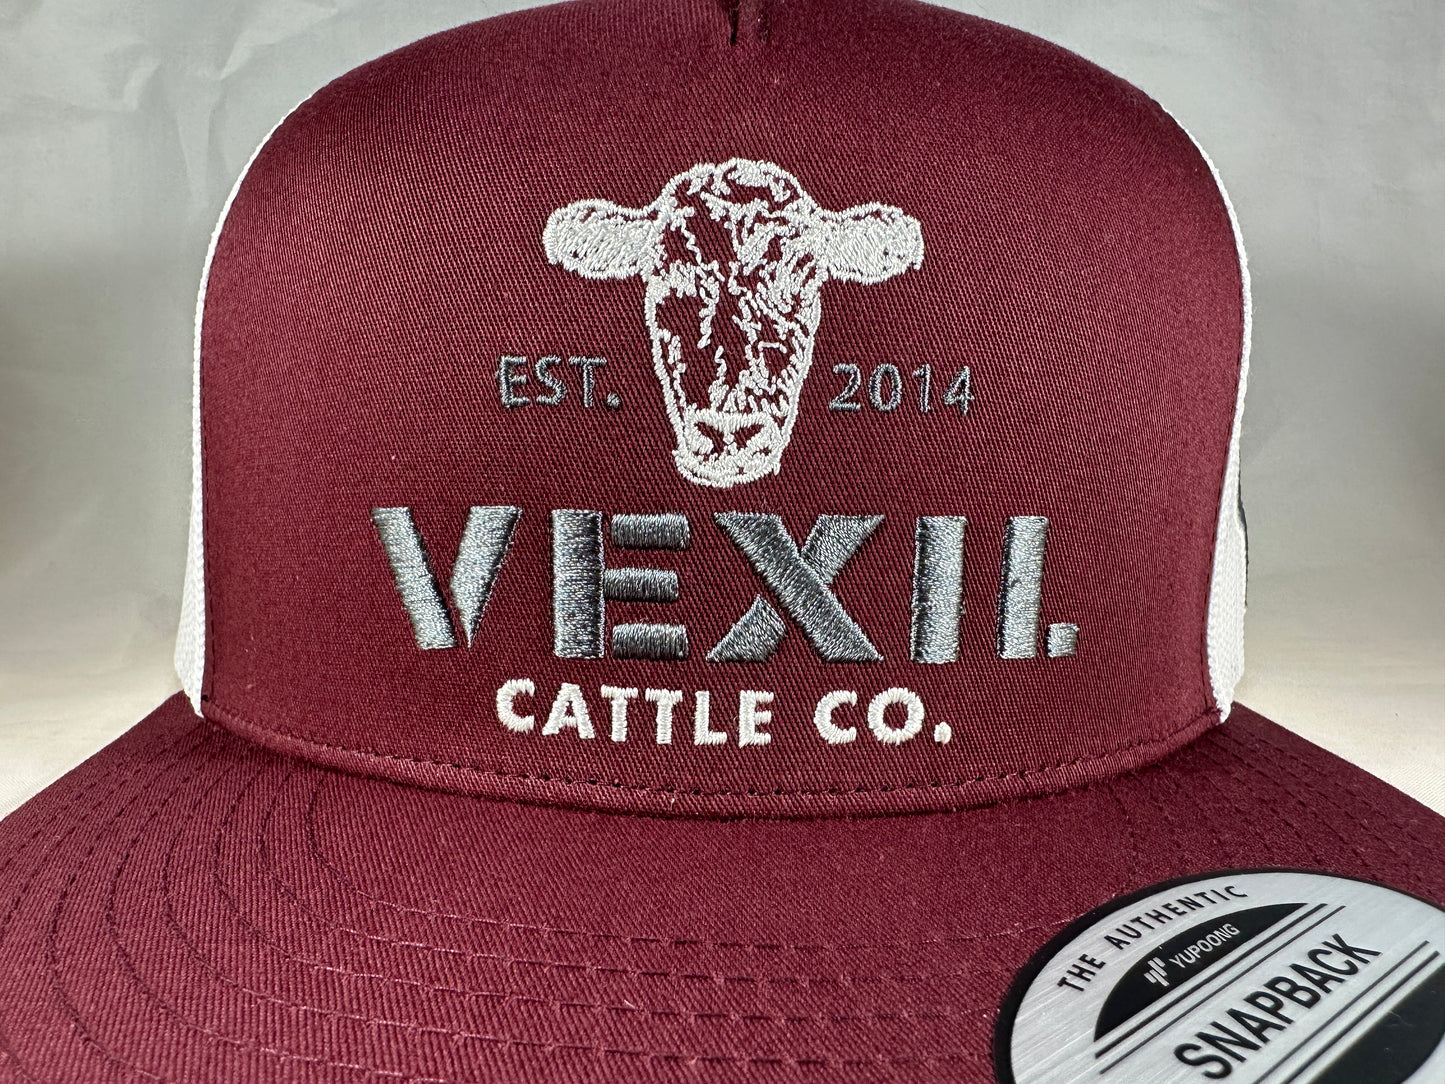 Vexil Cattle Co. - Est. 2014 - Maroon/White Mesh